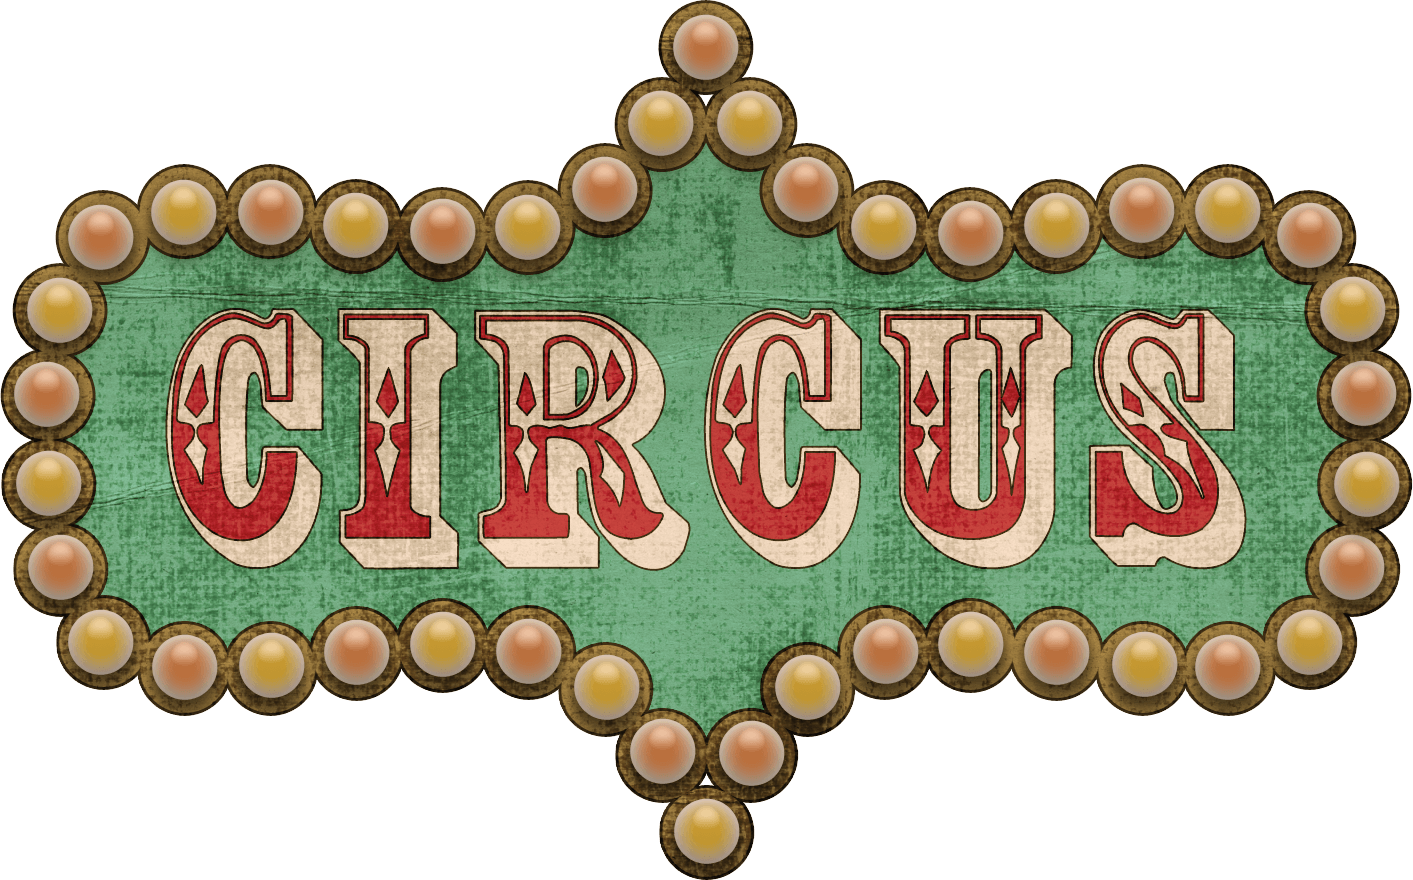 circus font microsoft word